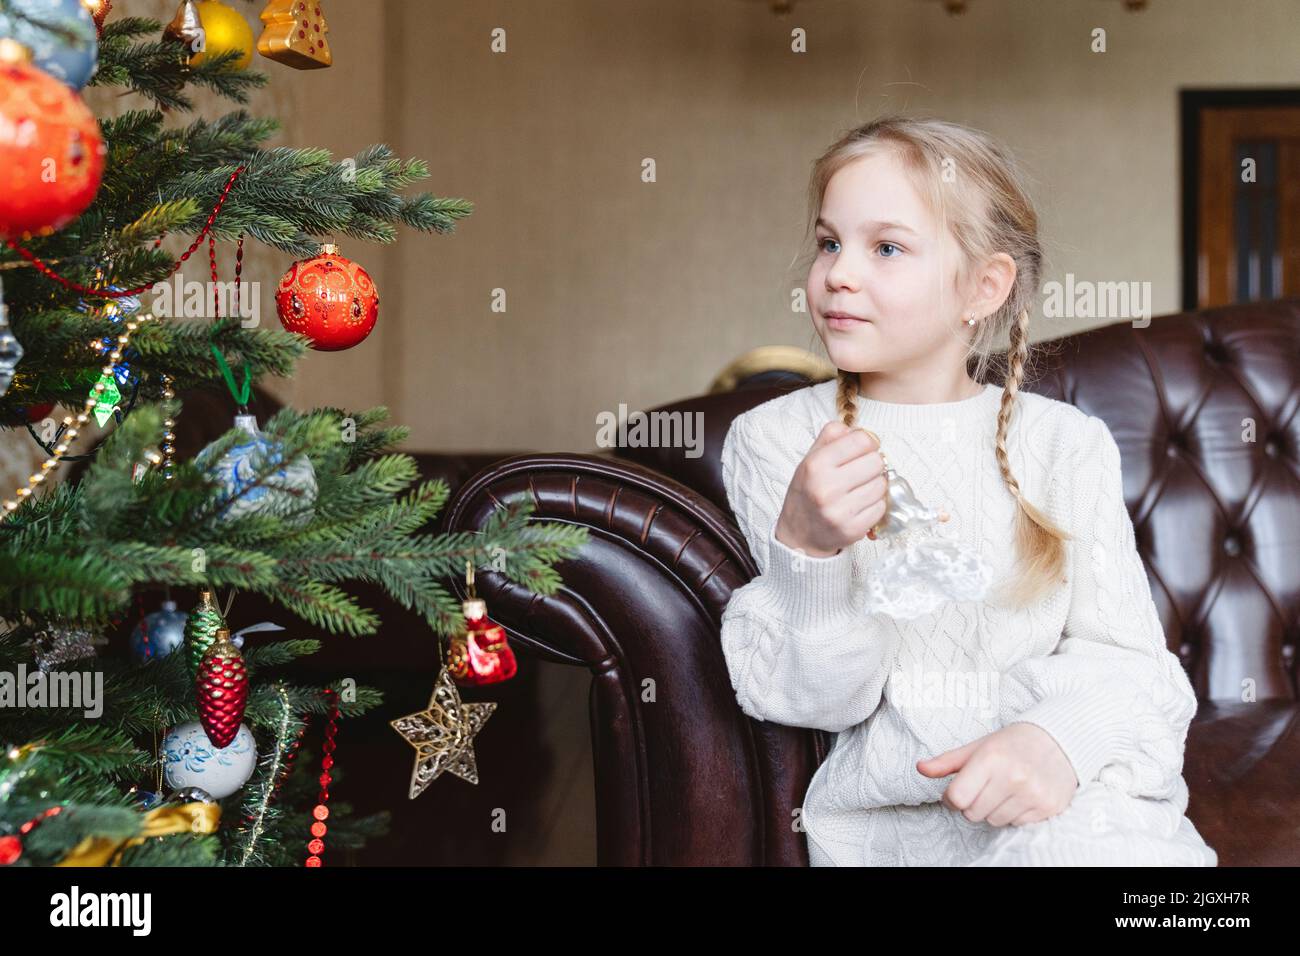 A girl with a Christmas tree toy near a festive Christmas tree. Stock Photo